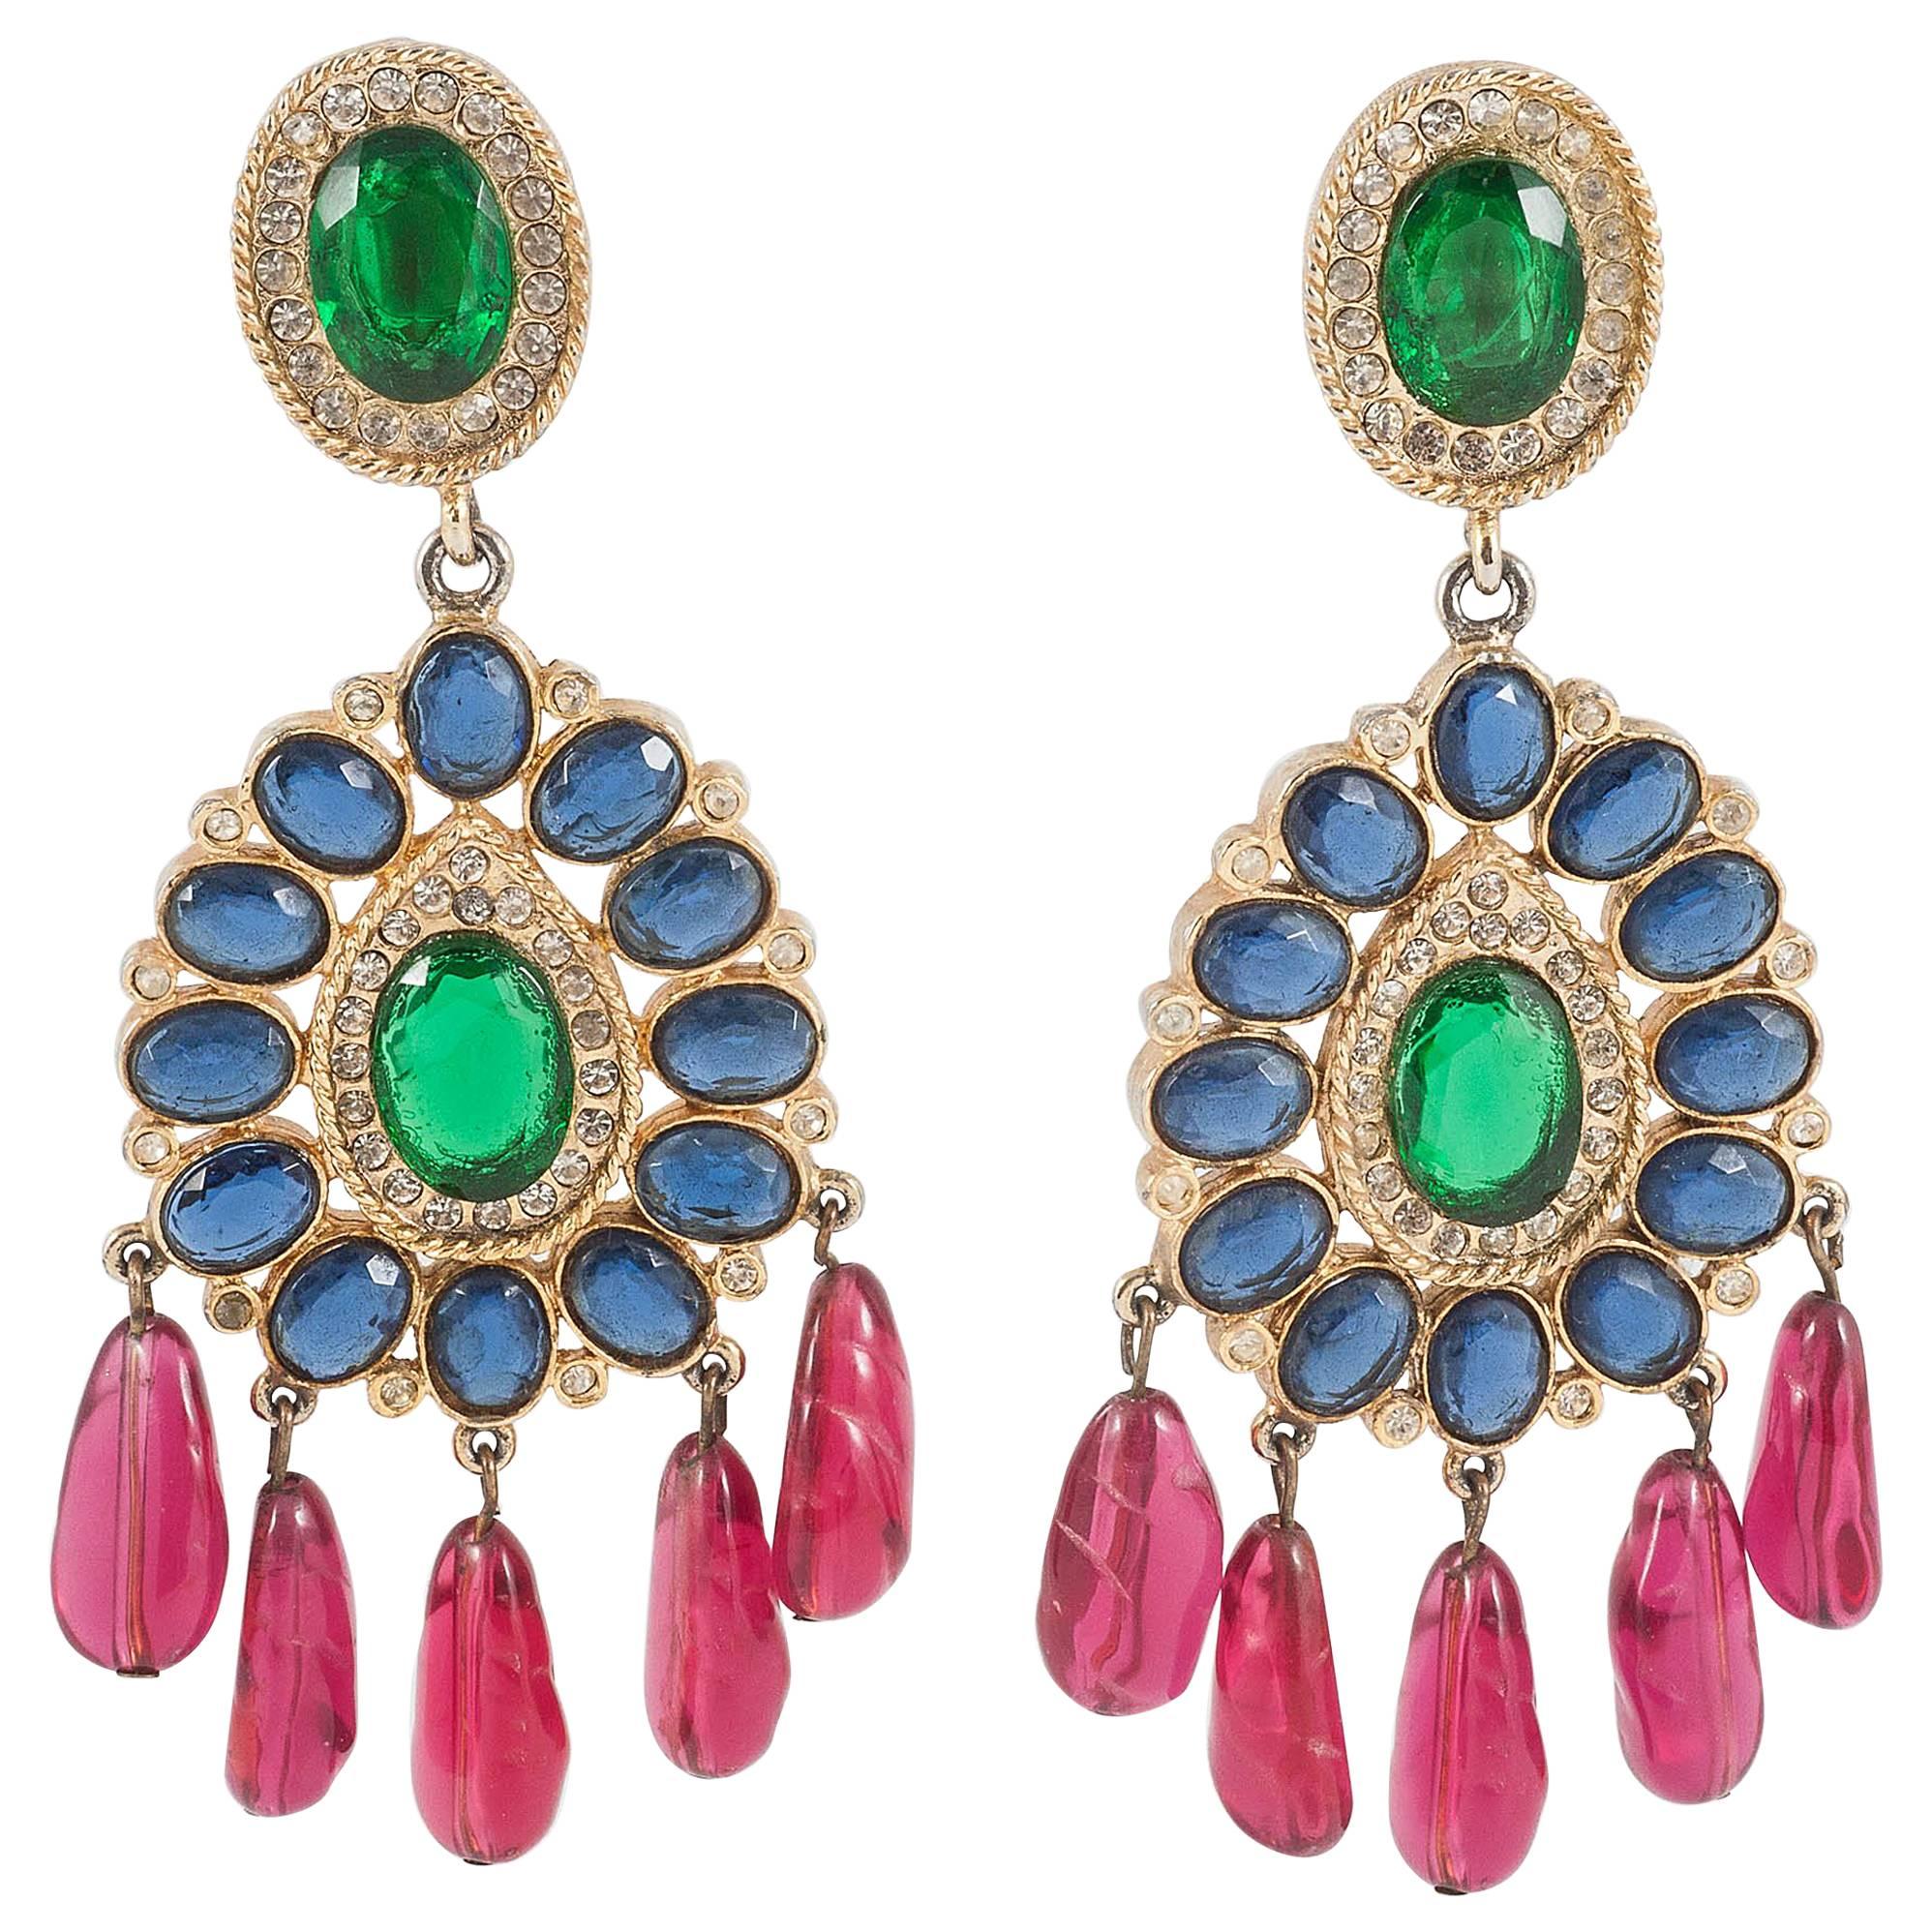 Spectacular colourful 'moghul style' earrings, Kenneth Jay Lane, 1970s 